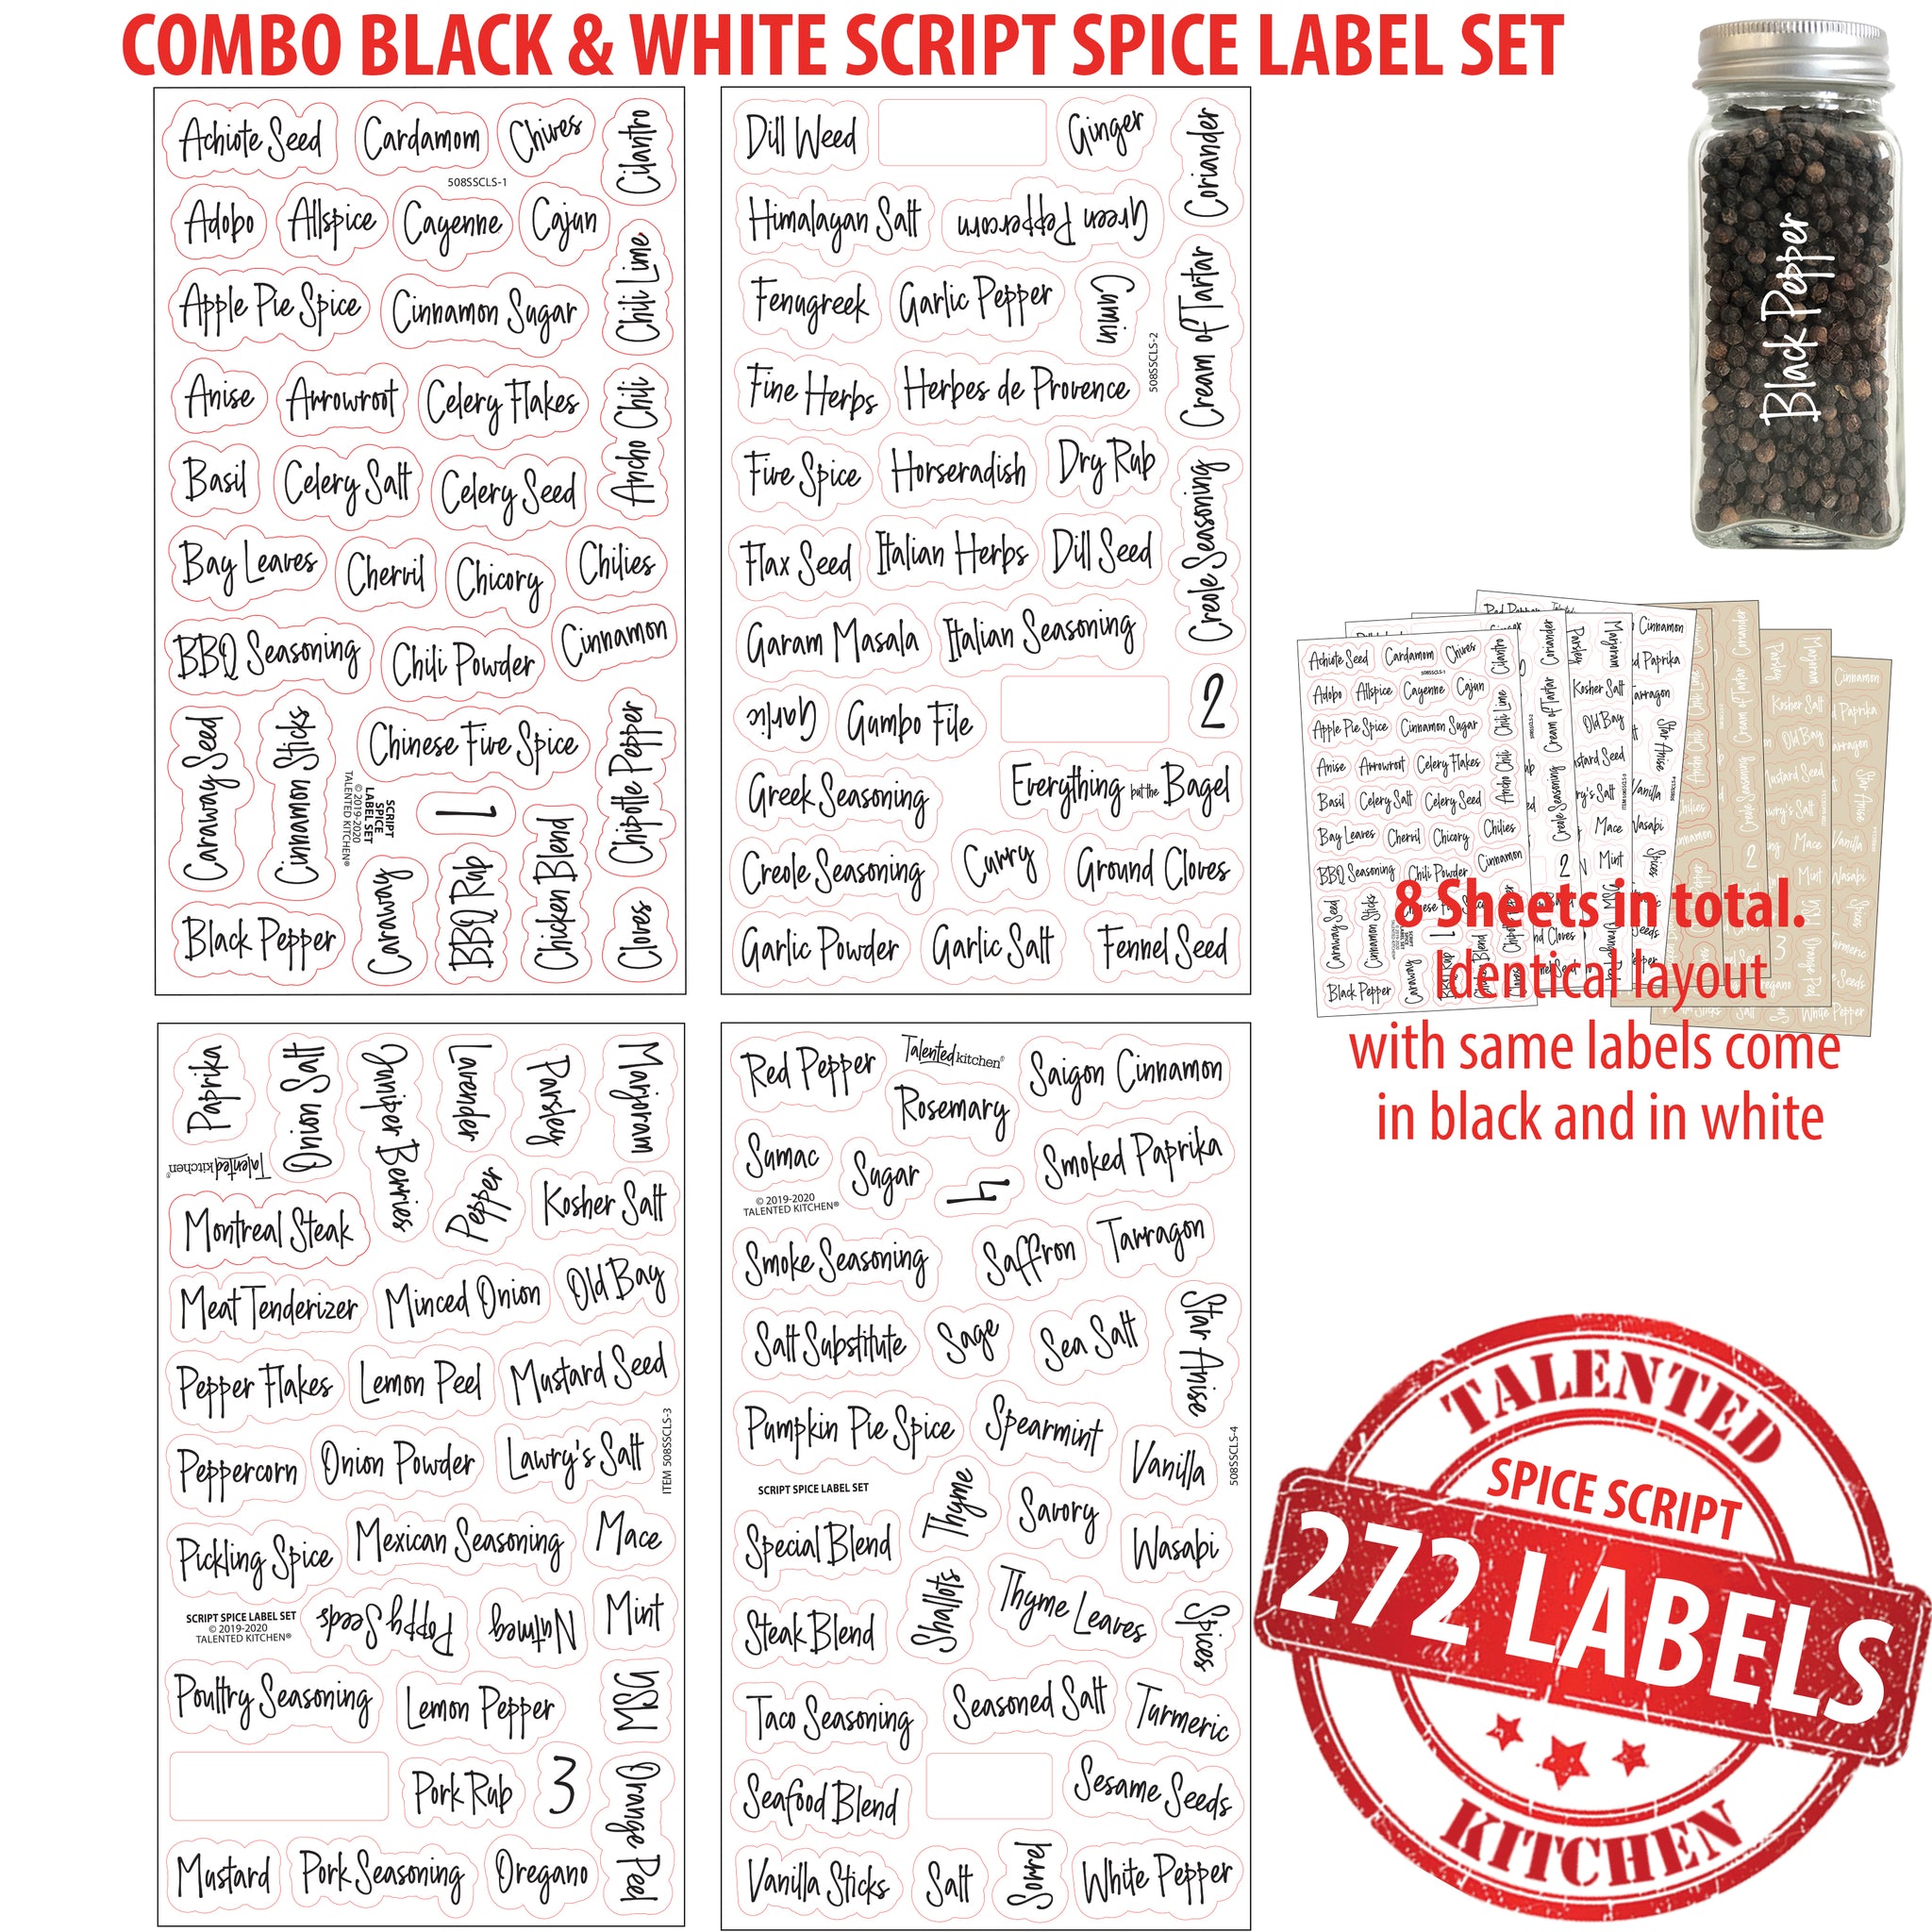 Script Spice Label Combo Set, 272 Black & White Labels – Talented